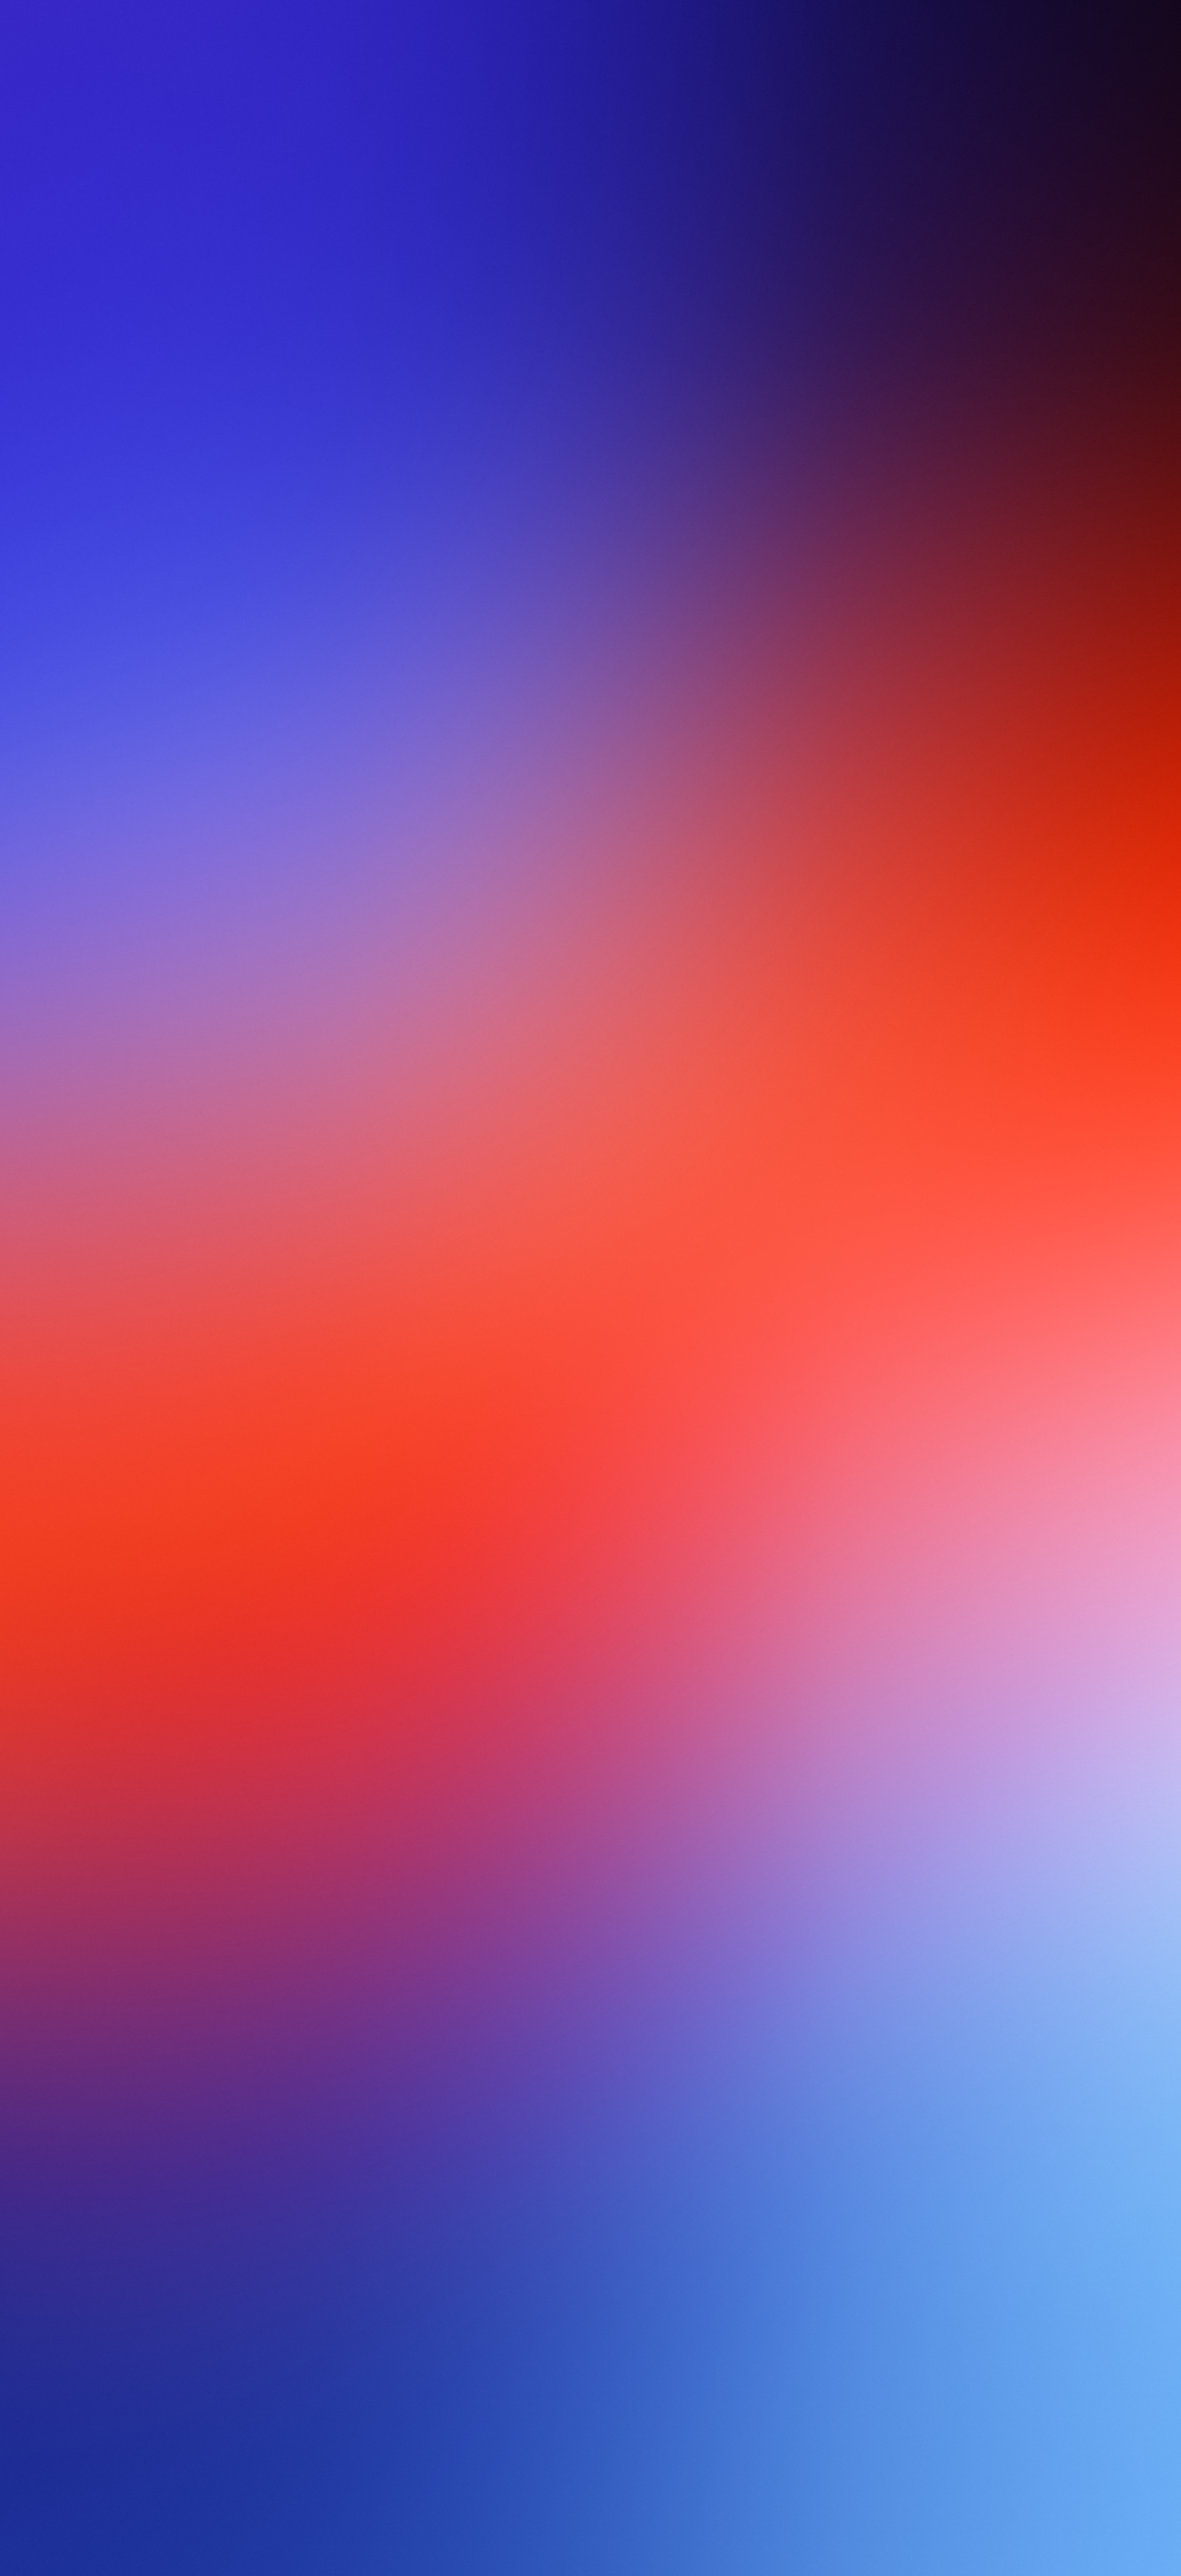 blue to red to blue gradient by evgeniyzemelko. Wallpaper iphone love, Cool wallpaper for phones, Apple wallpaper